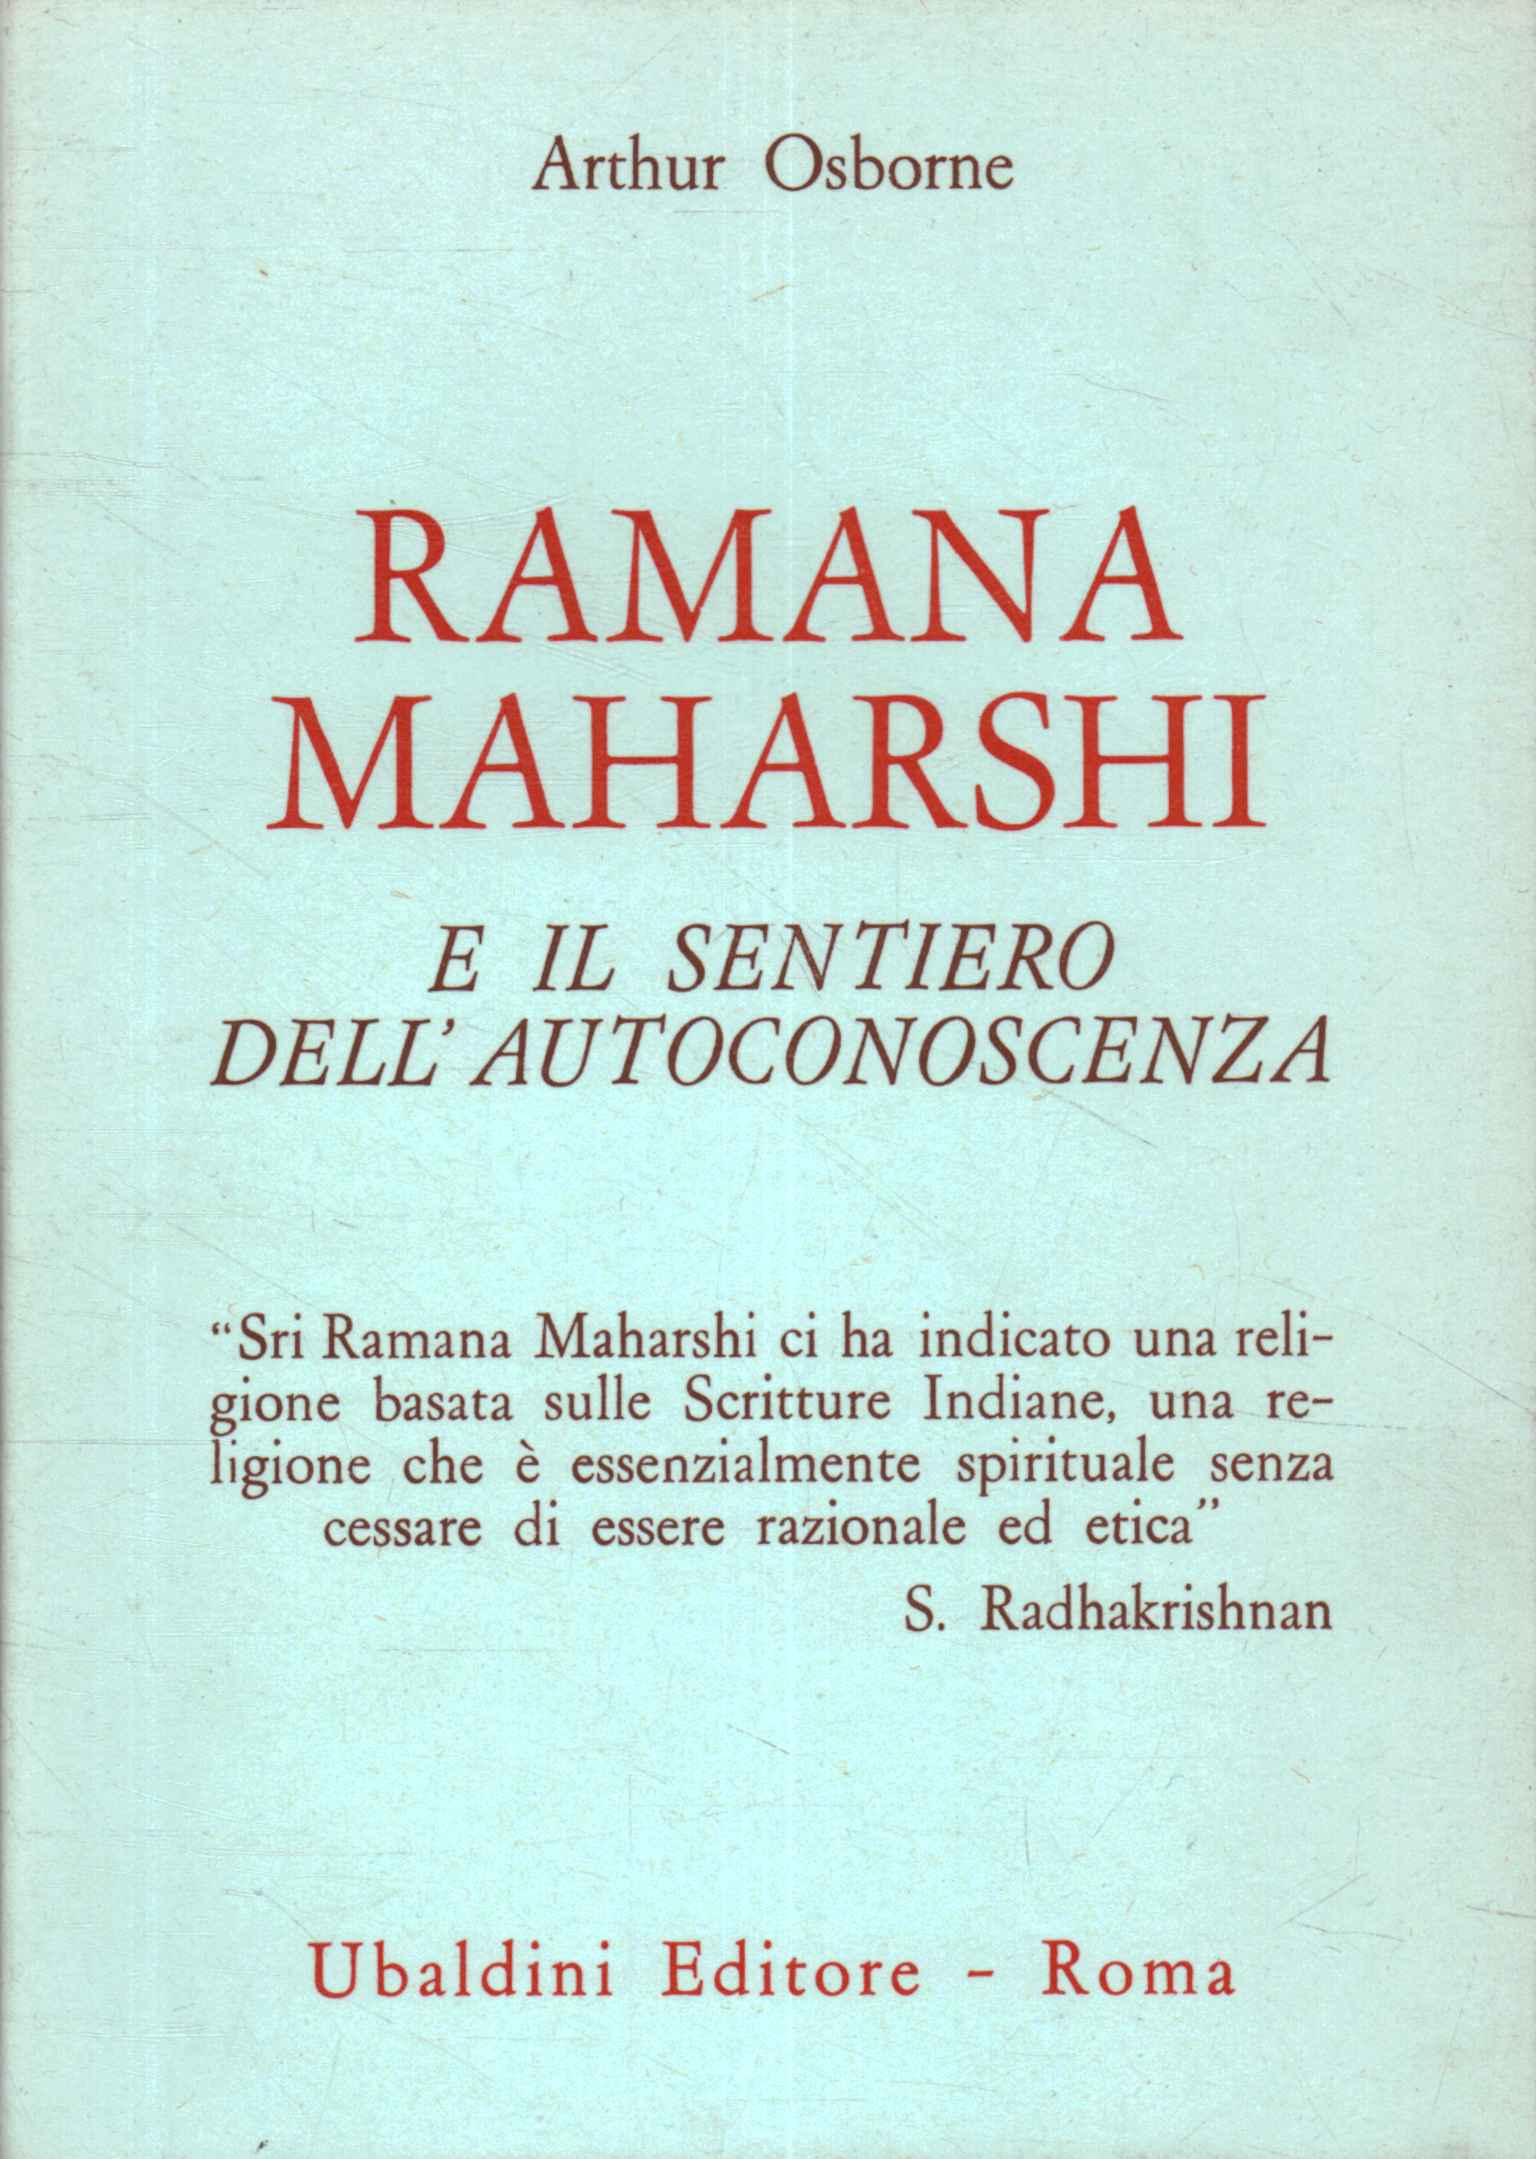 Ramana Maharshi and the path of the apostle